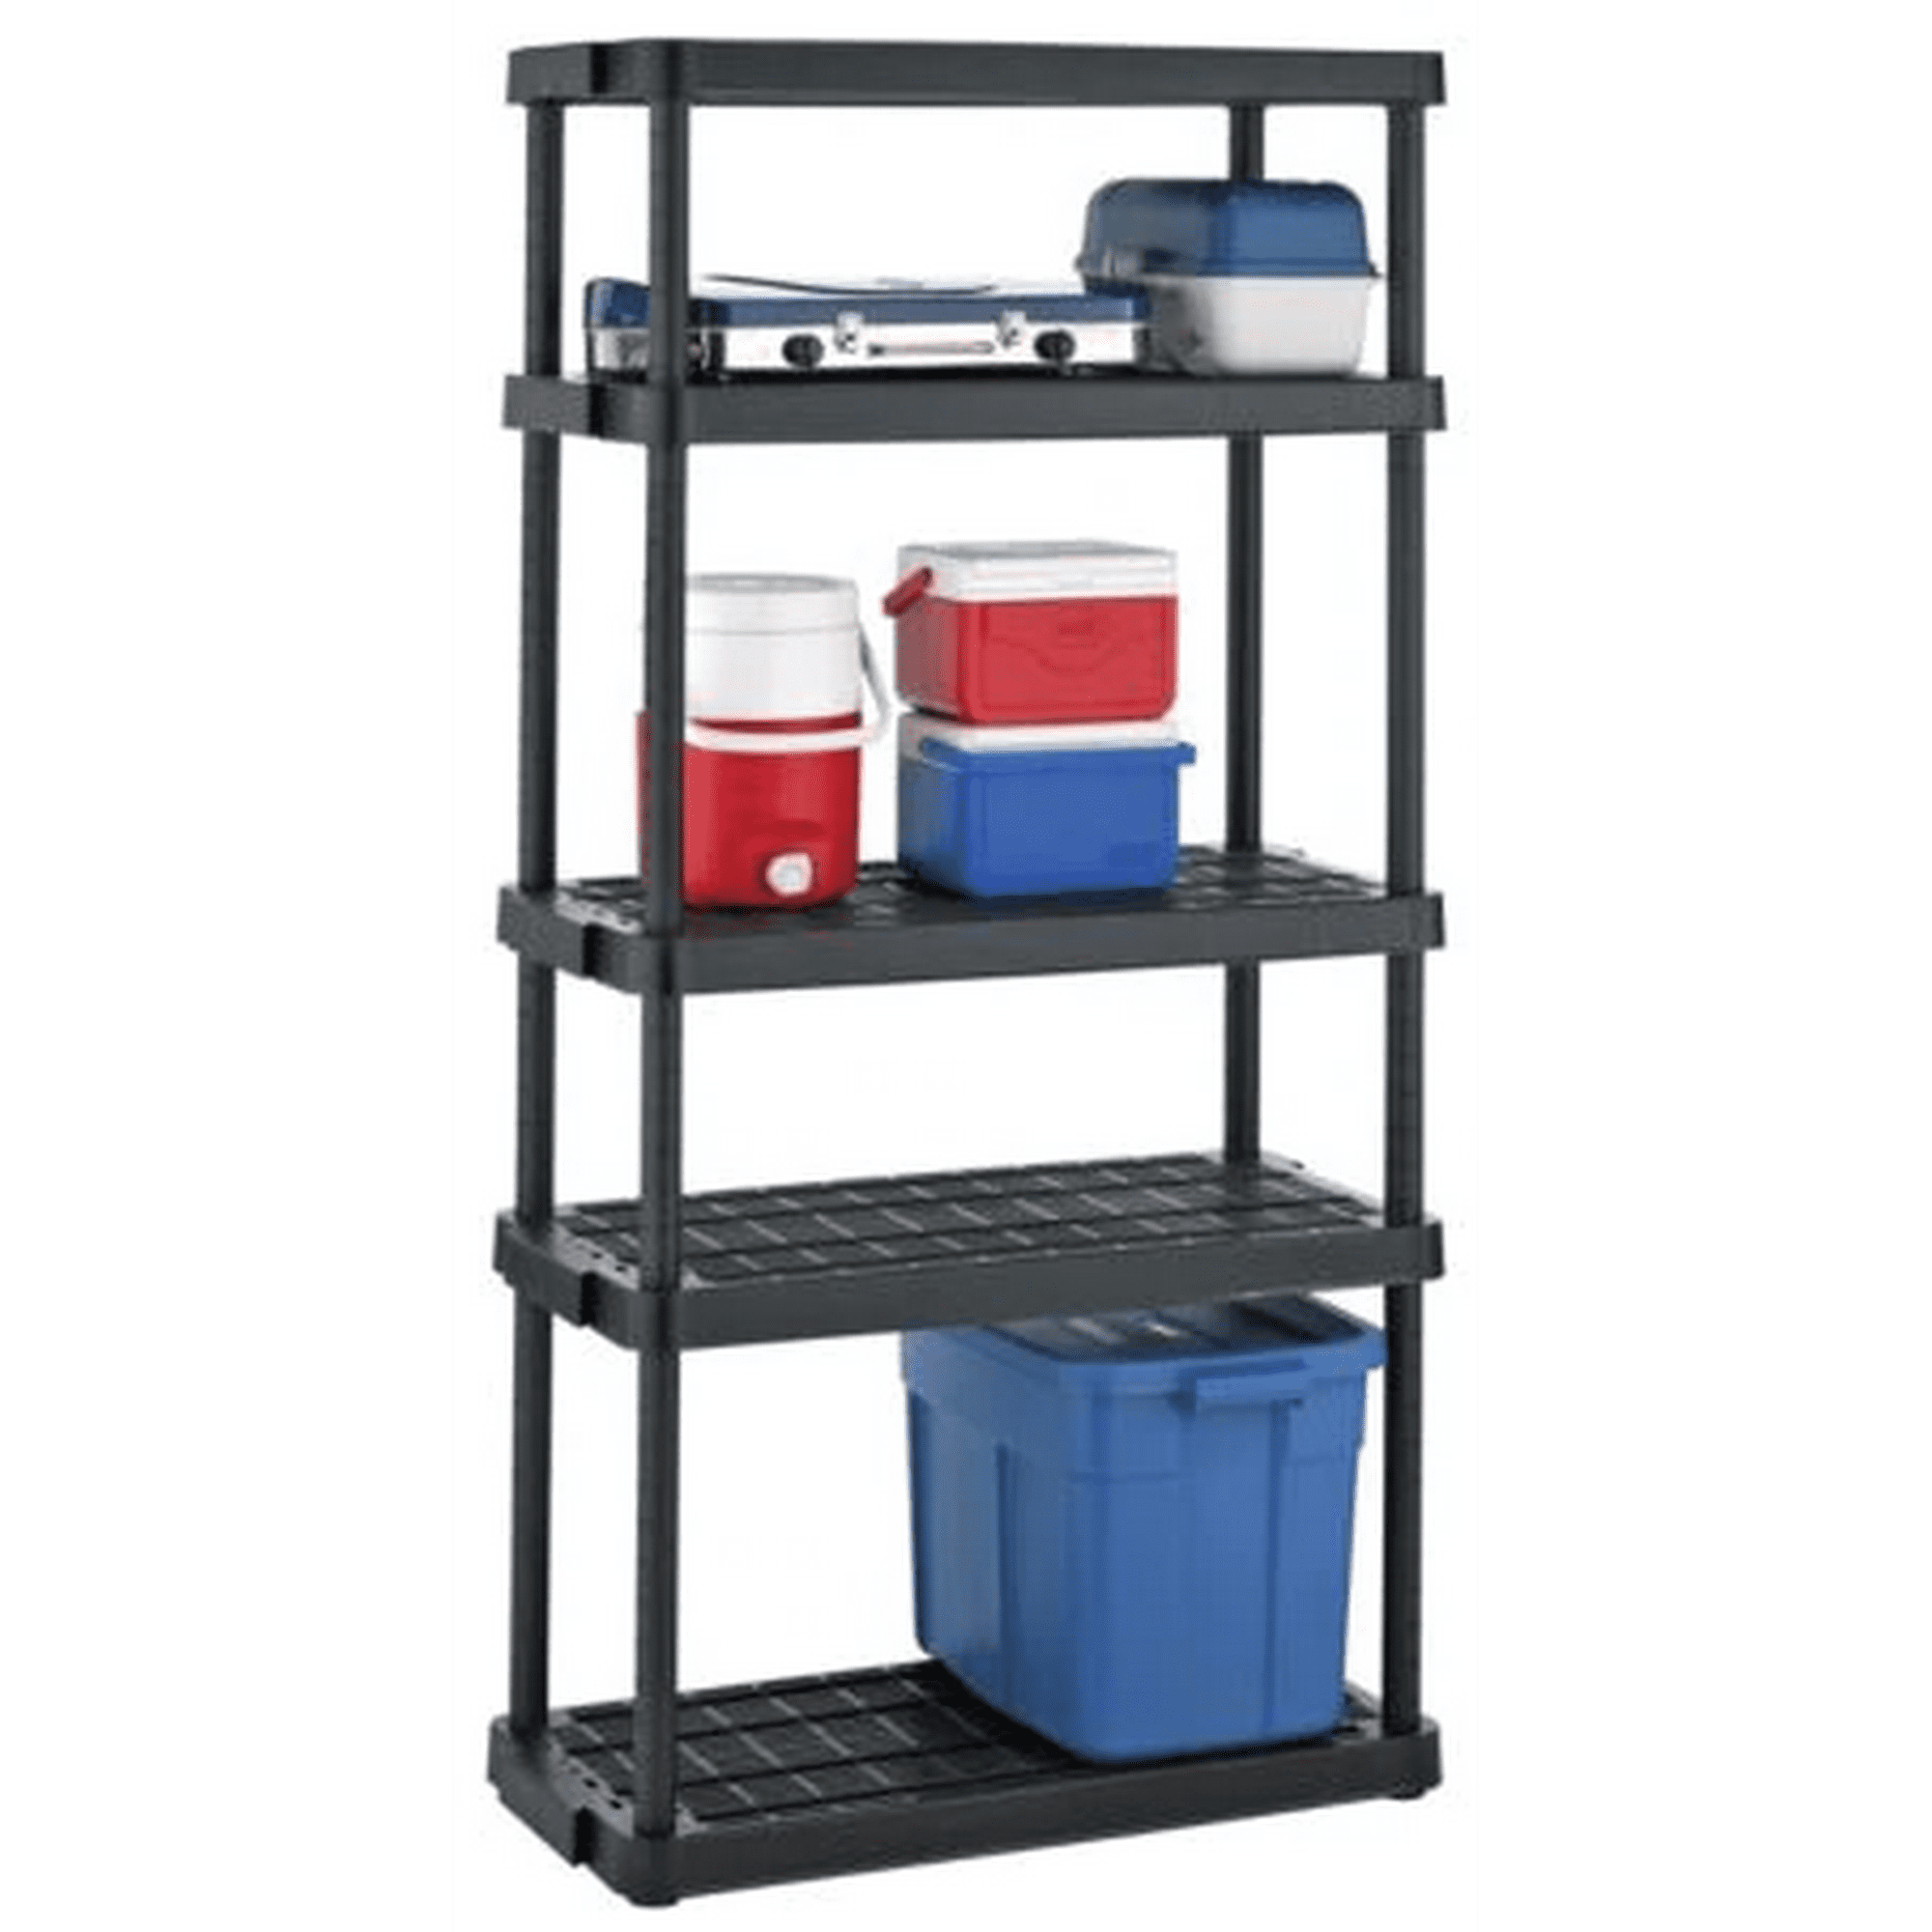 Certified Adjustable 5 Shelf Resin Rack, Resin Shelving System